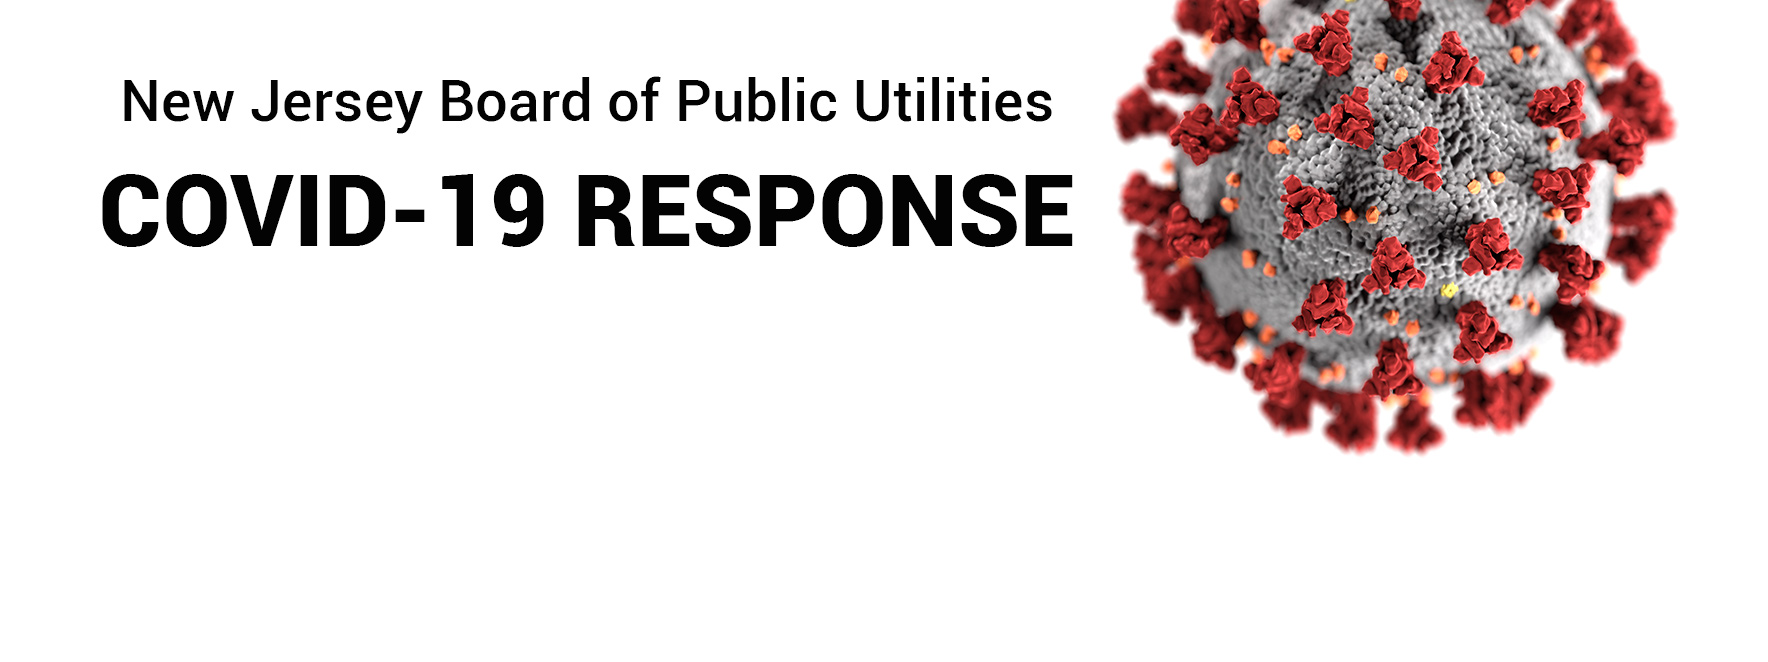 New Jersey Board of Public Utilities COVID-19 RESPONSE 